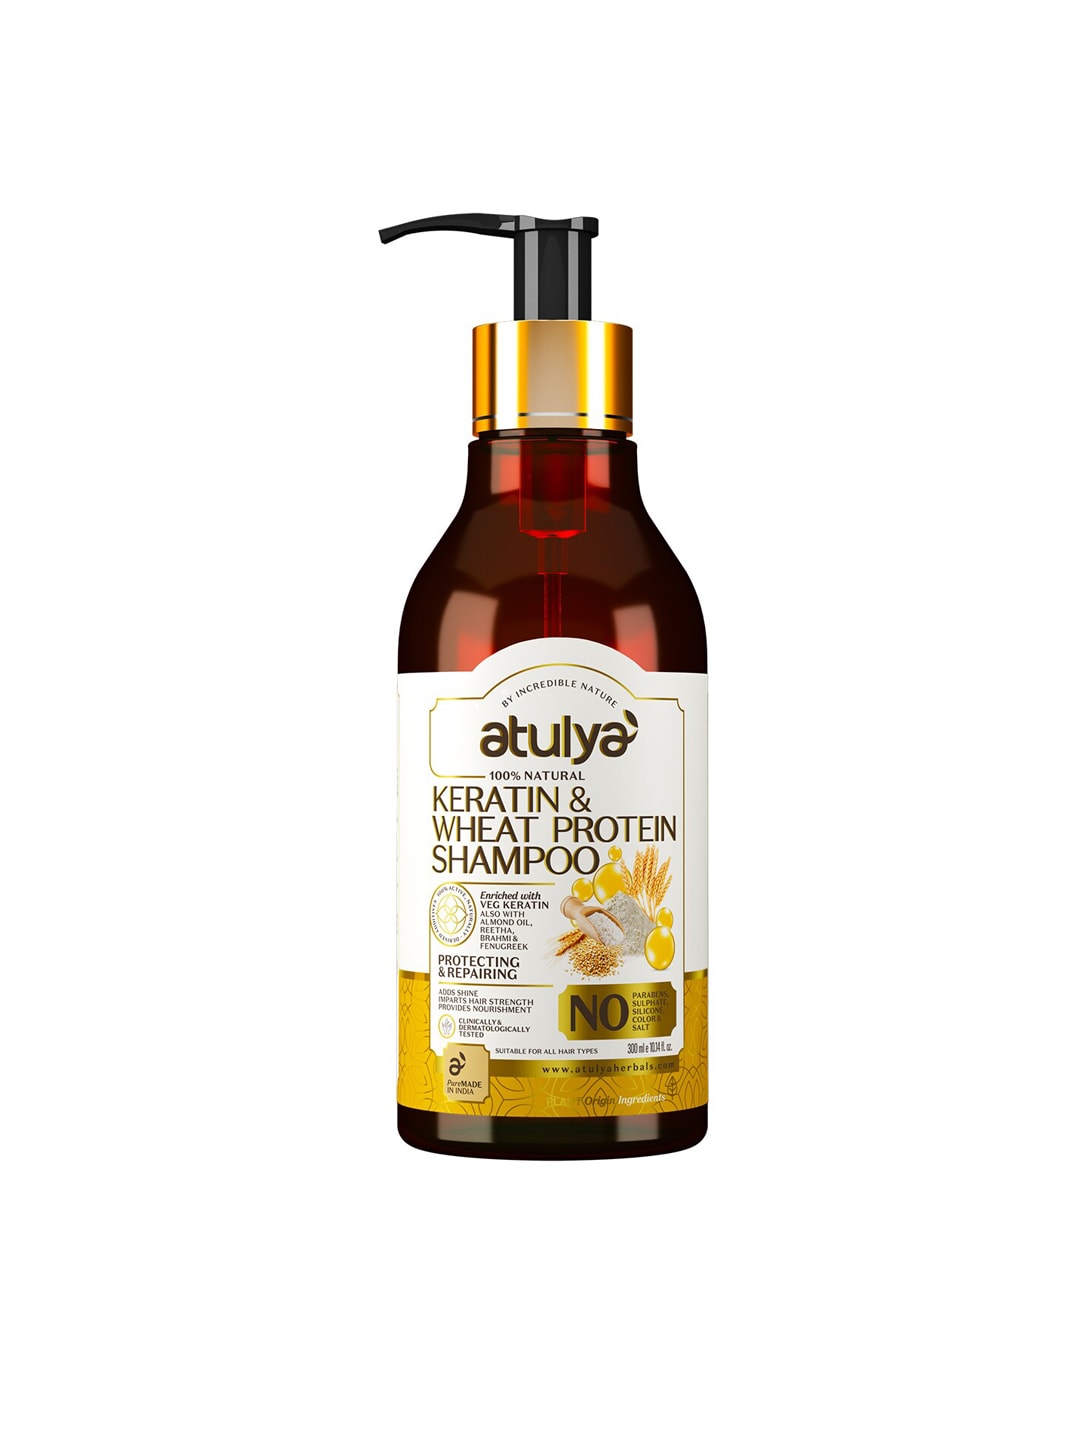 Atulya Keratin & Wheat Protein Shampoo - Imparts Hair Strength - 300 ml Price in India